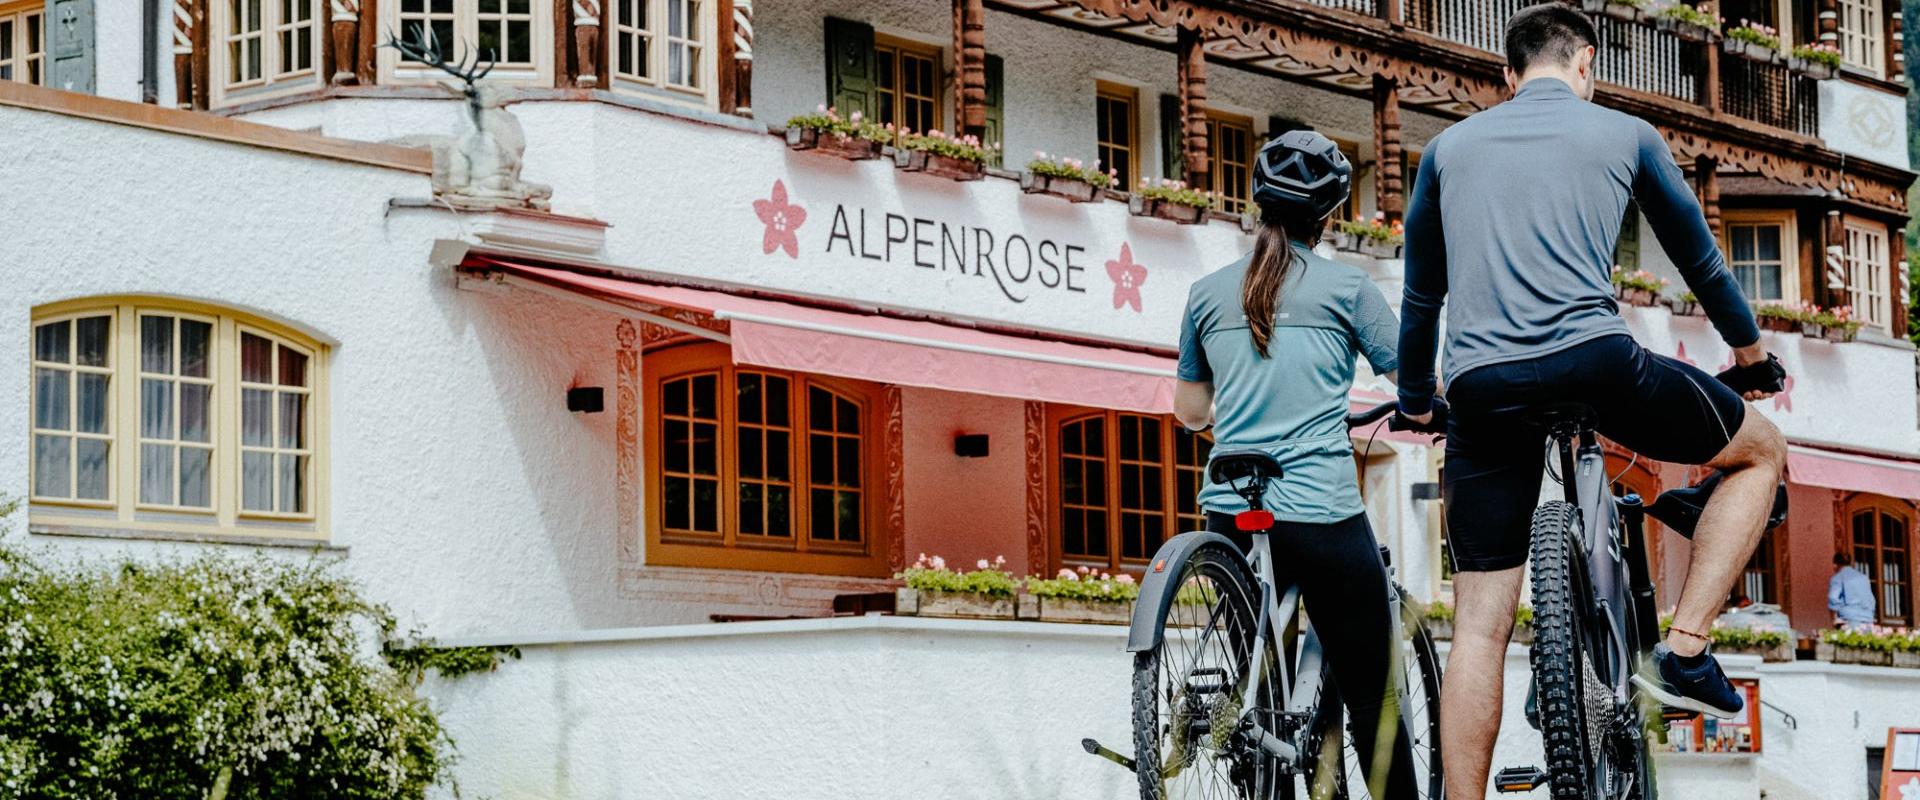 13689 Hotel Alpenrose Oberbayern Ansicht ebike.jpeg